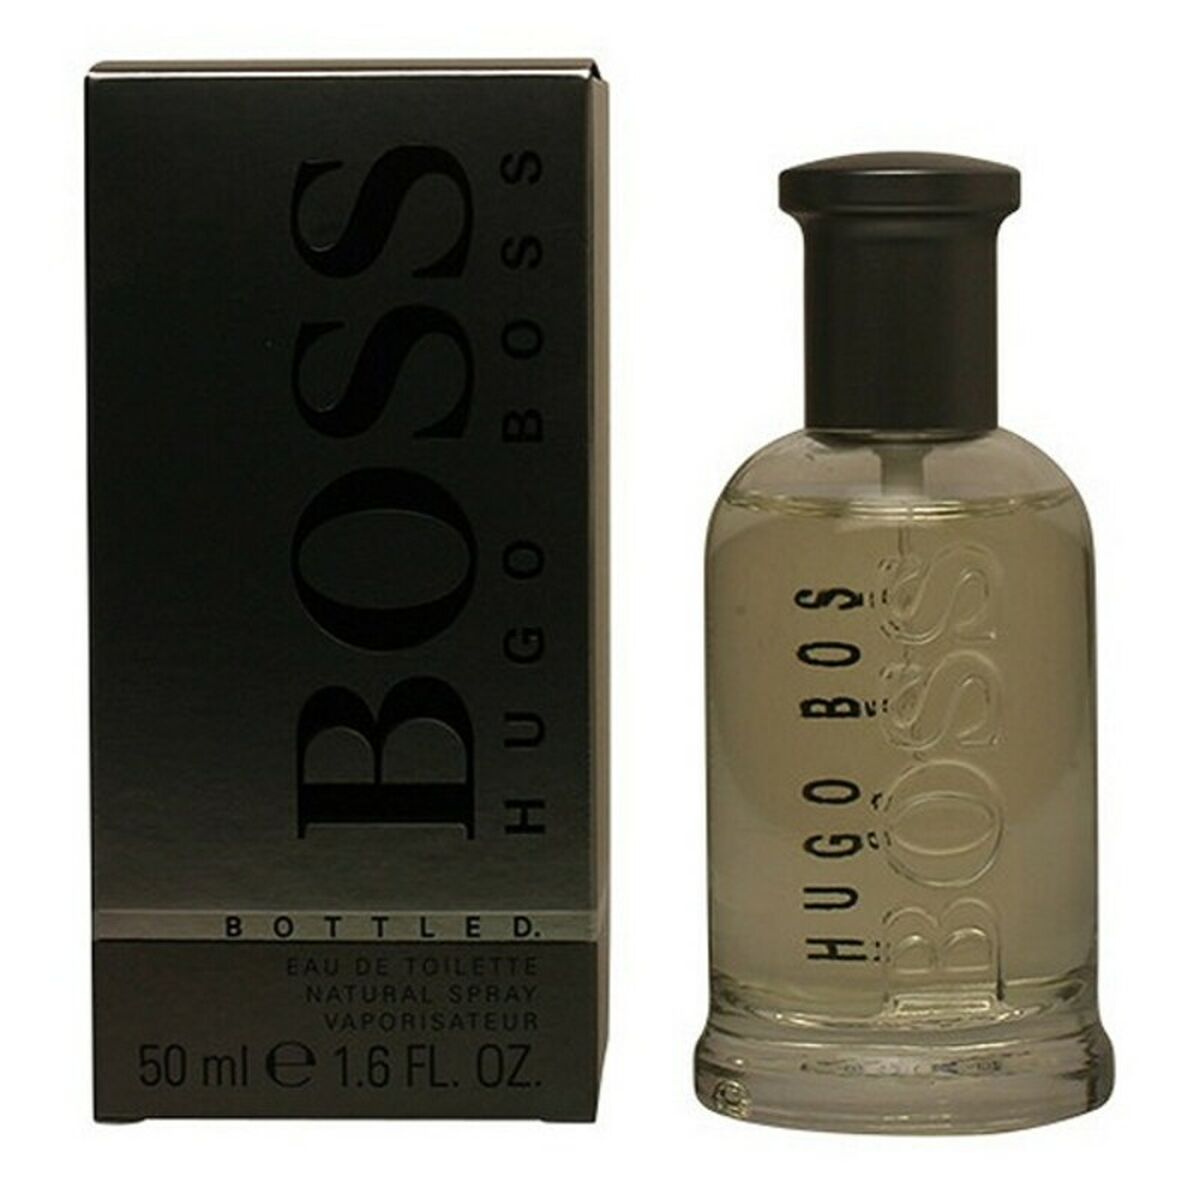 Hugo Boss Bottled мужские 200ml. Hugo Boss Boss №6, 100 ml. Boss Hugo Boss EDT 50 ml. Мужские духи Hugo Boss "№6". Духи босс оригинал